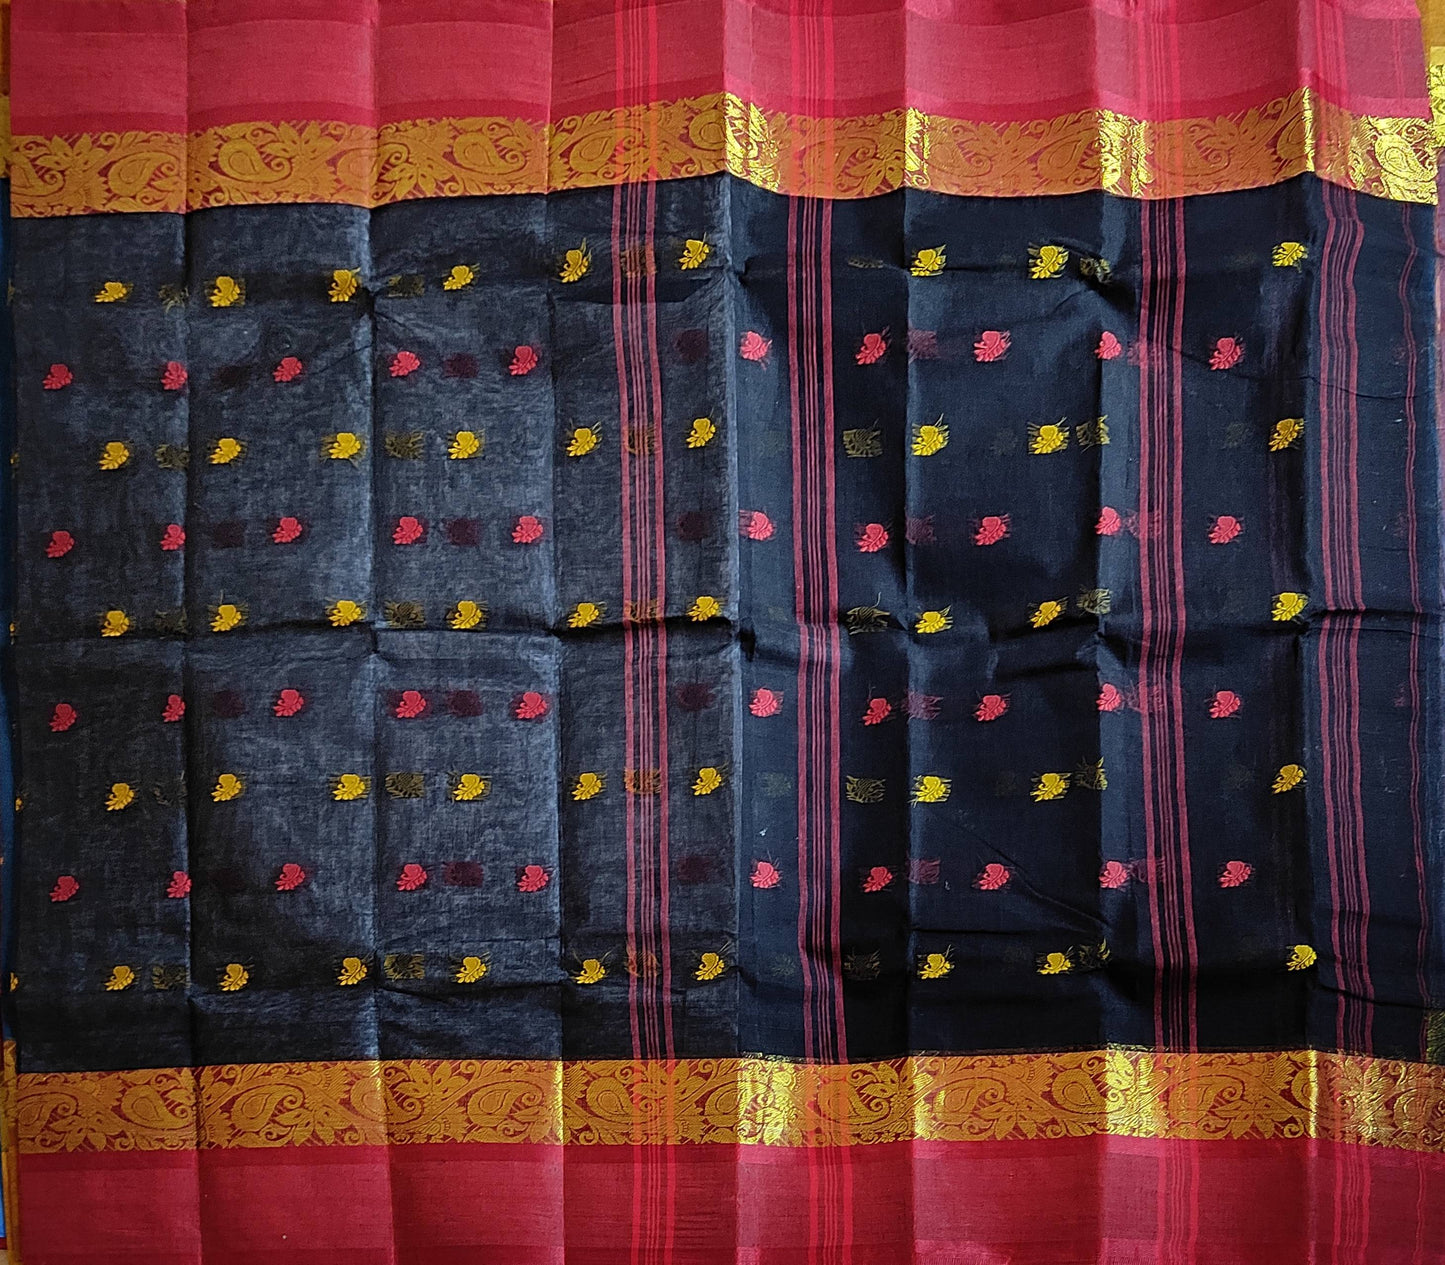 Pradip Fabrics Woven Black  color  Pure Tant cotton  Saree